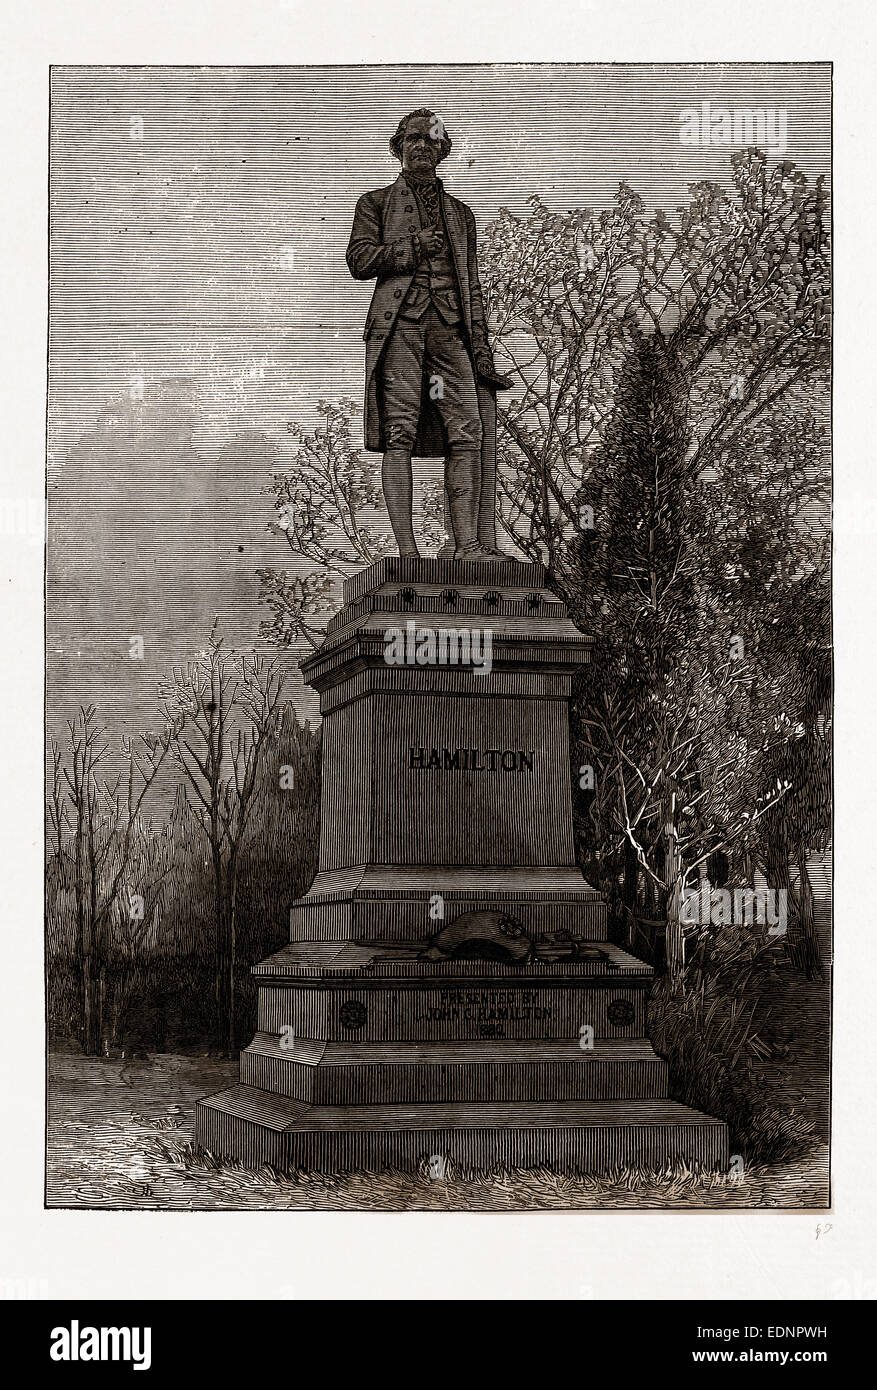 STATUE OF ALEXANDER HAMILTON, CENTRAL PARK, 19th century engraving, USA, America Stock Photo